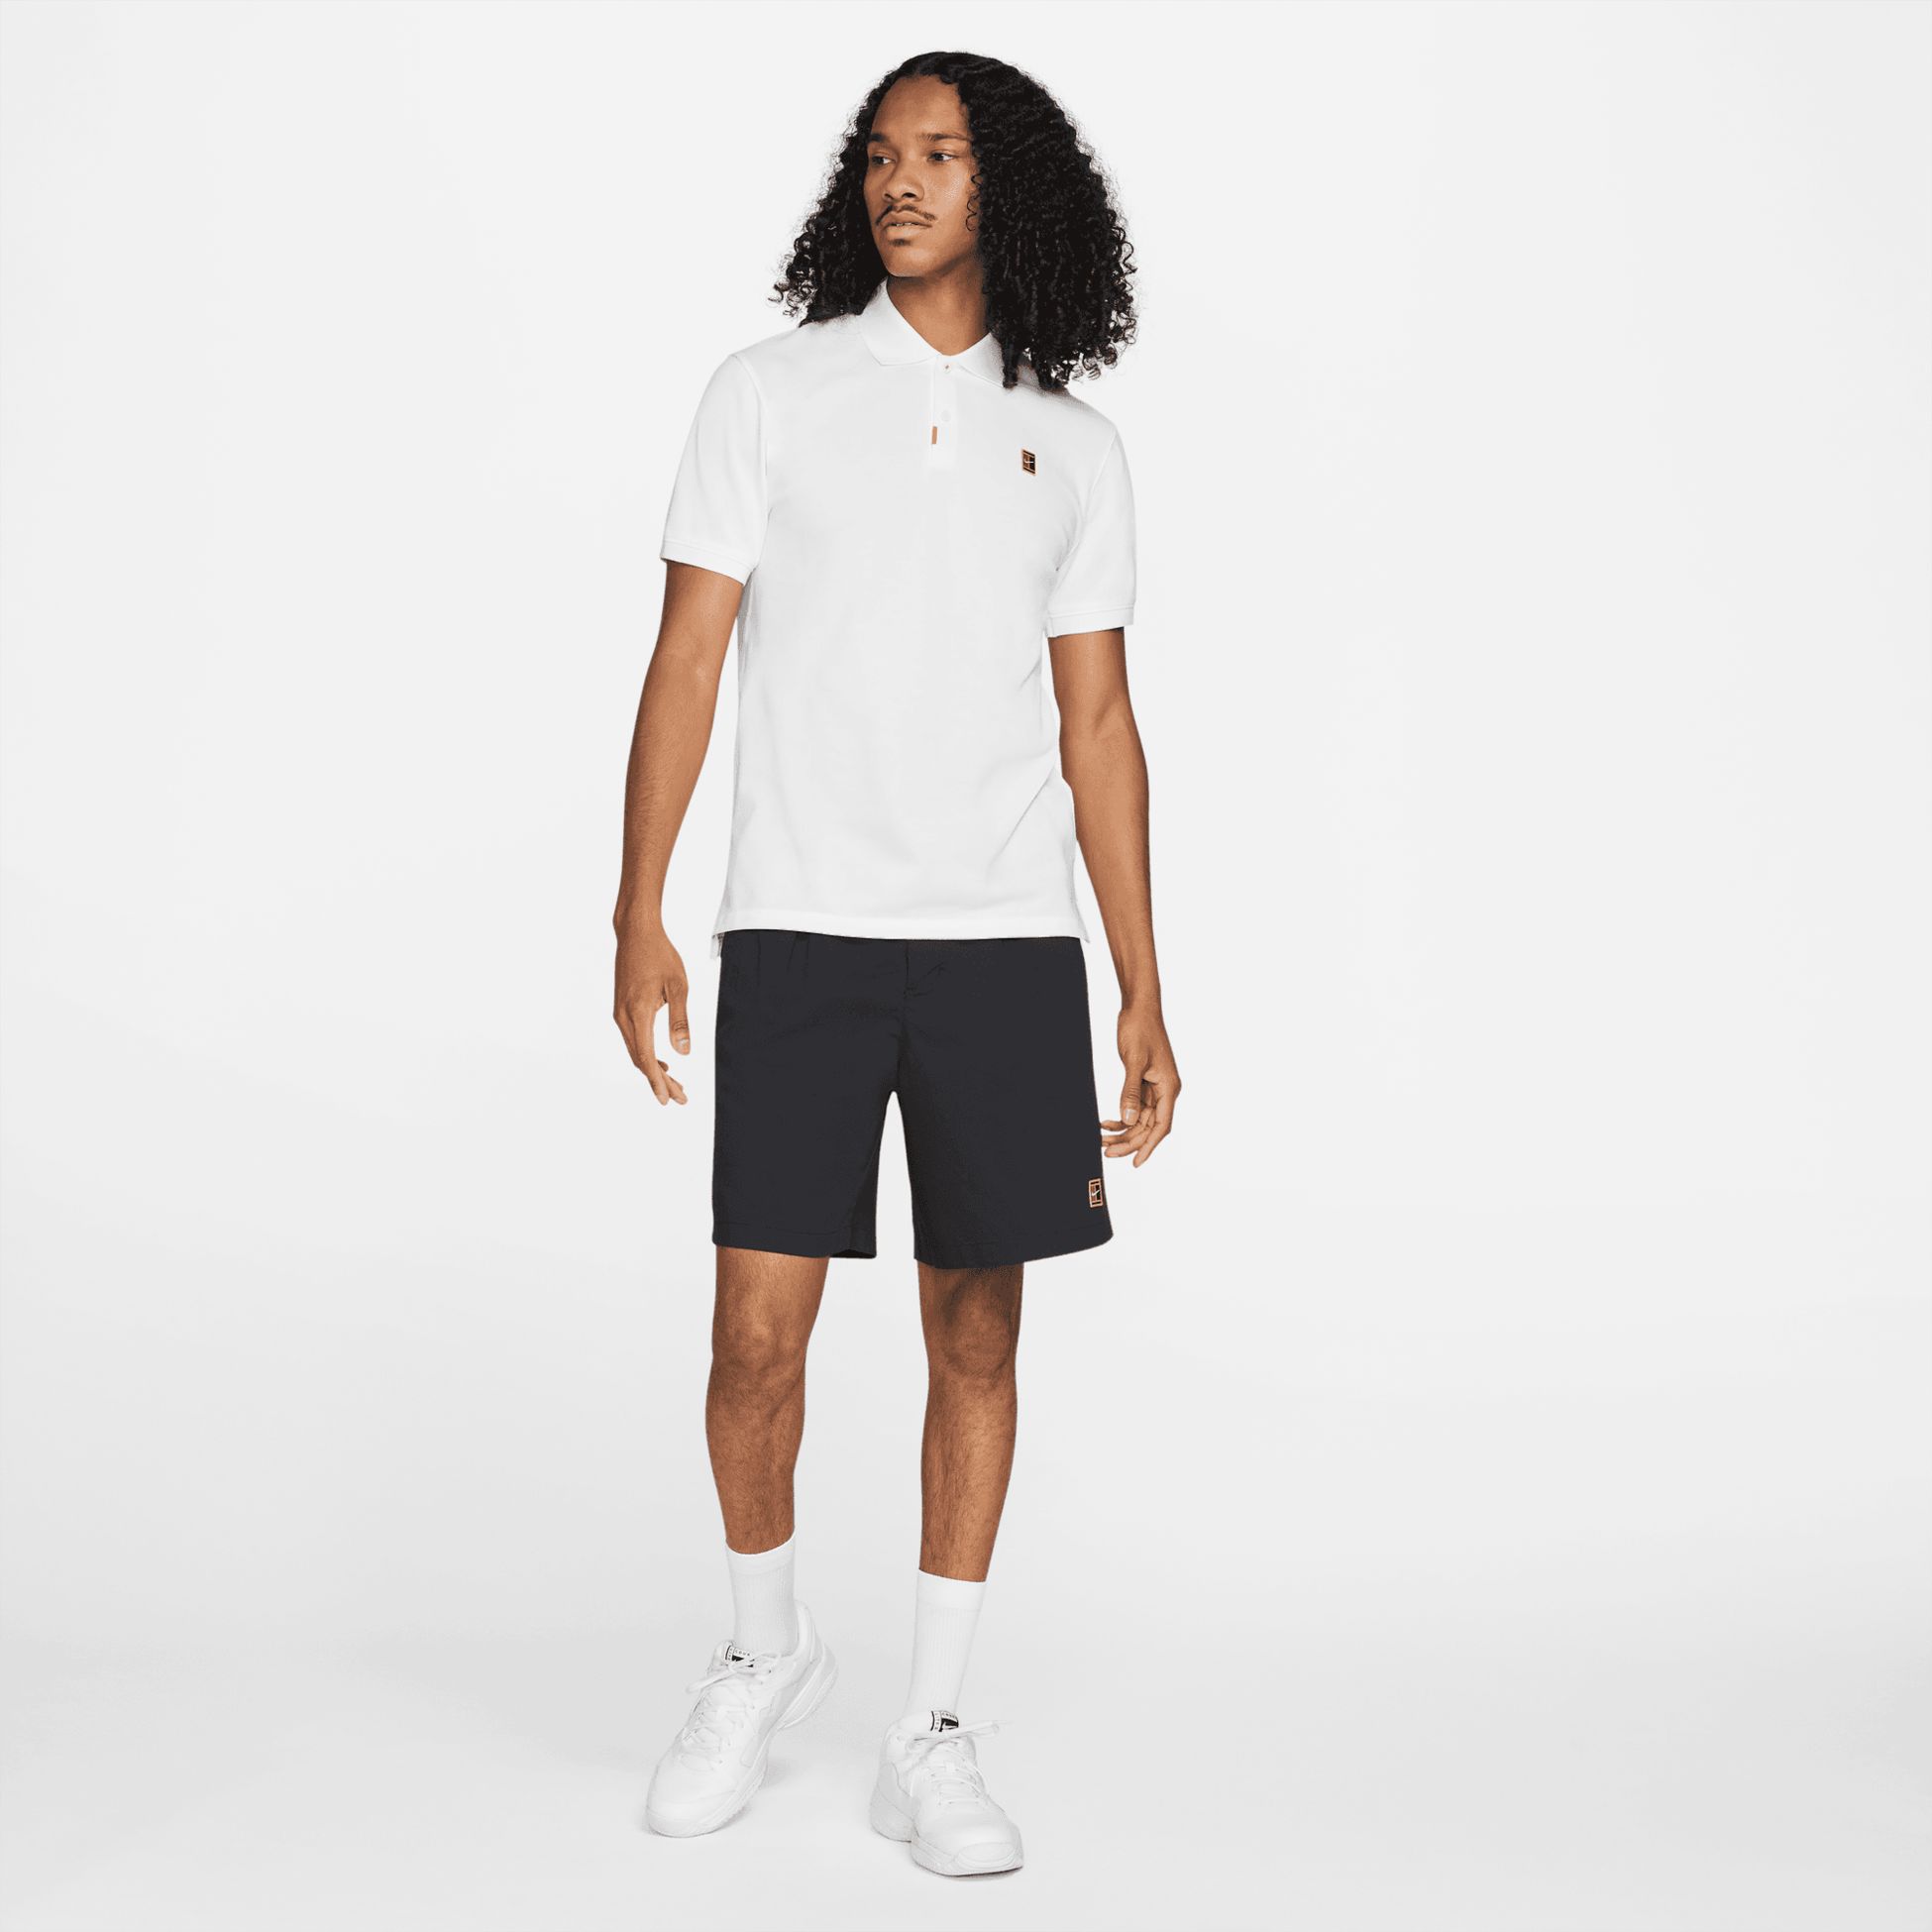 NIKE, The Nike Polo Men's Slim Fit Polo